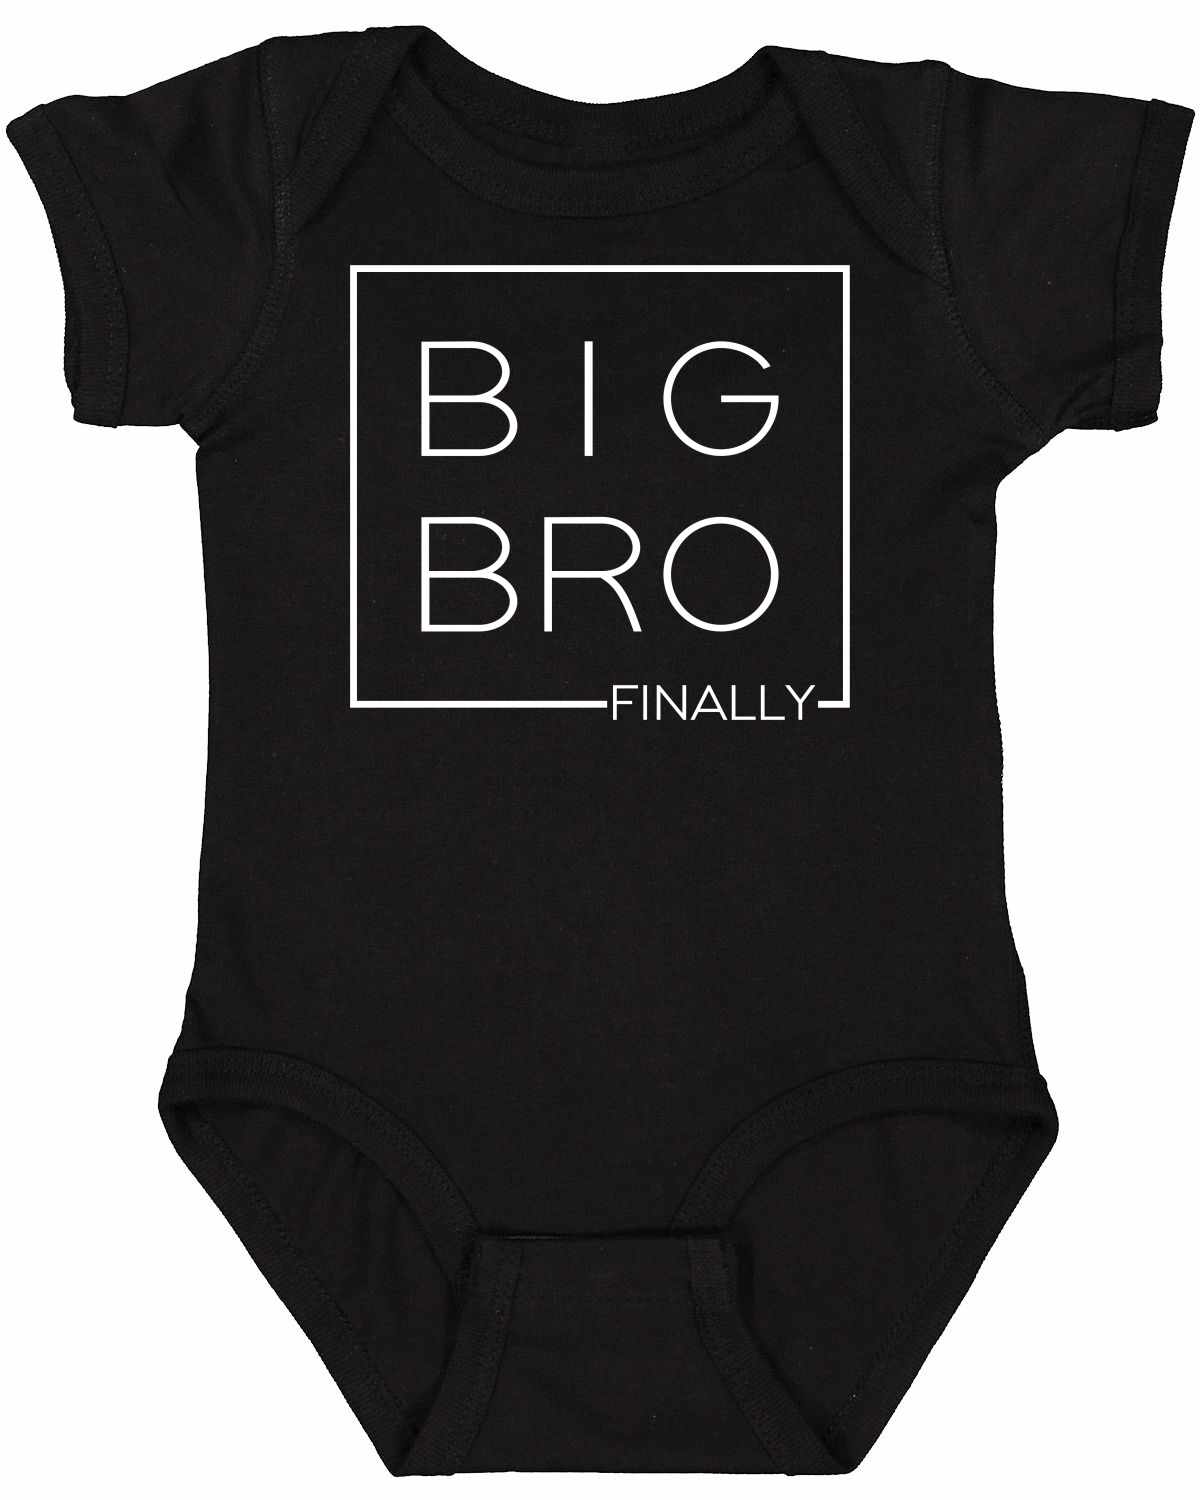 Big Bro Finally- Big Brother Boxed on Infant BodySuit (#1314-10)